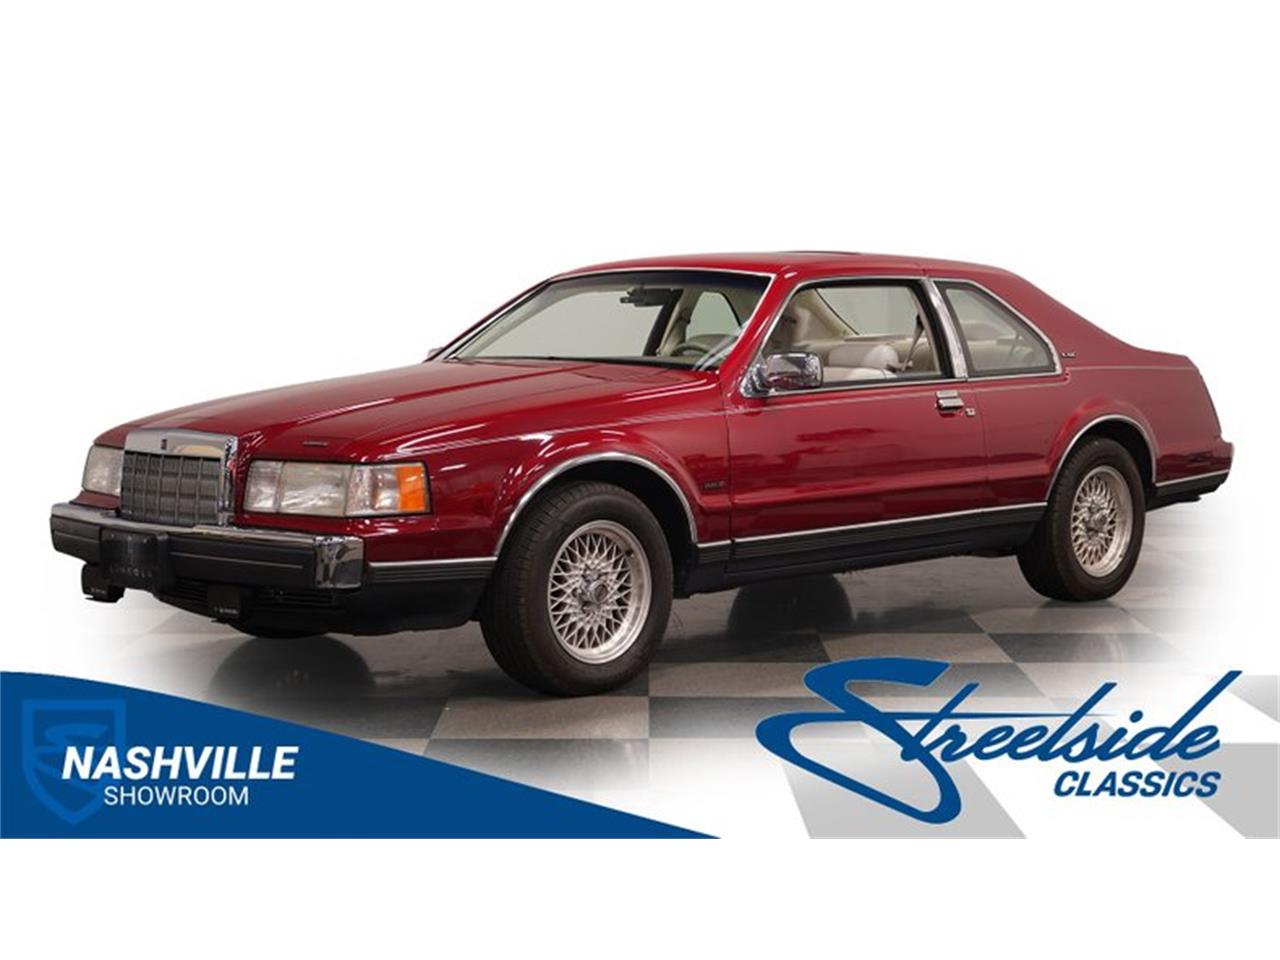 For Sale: 1991 Lincoln Mark VII in Lavergne, Tennessee for sale in La Vergne, TN